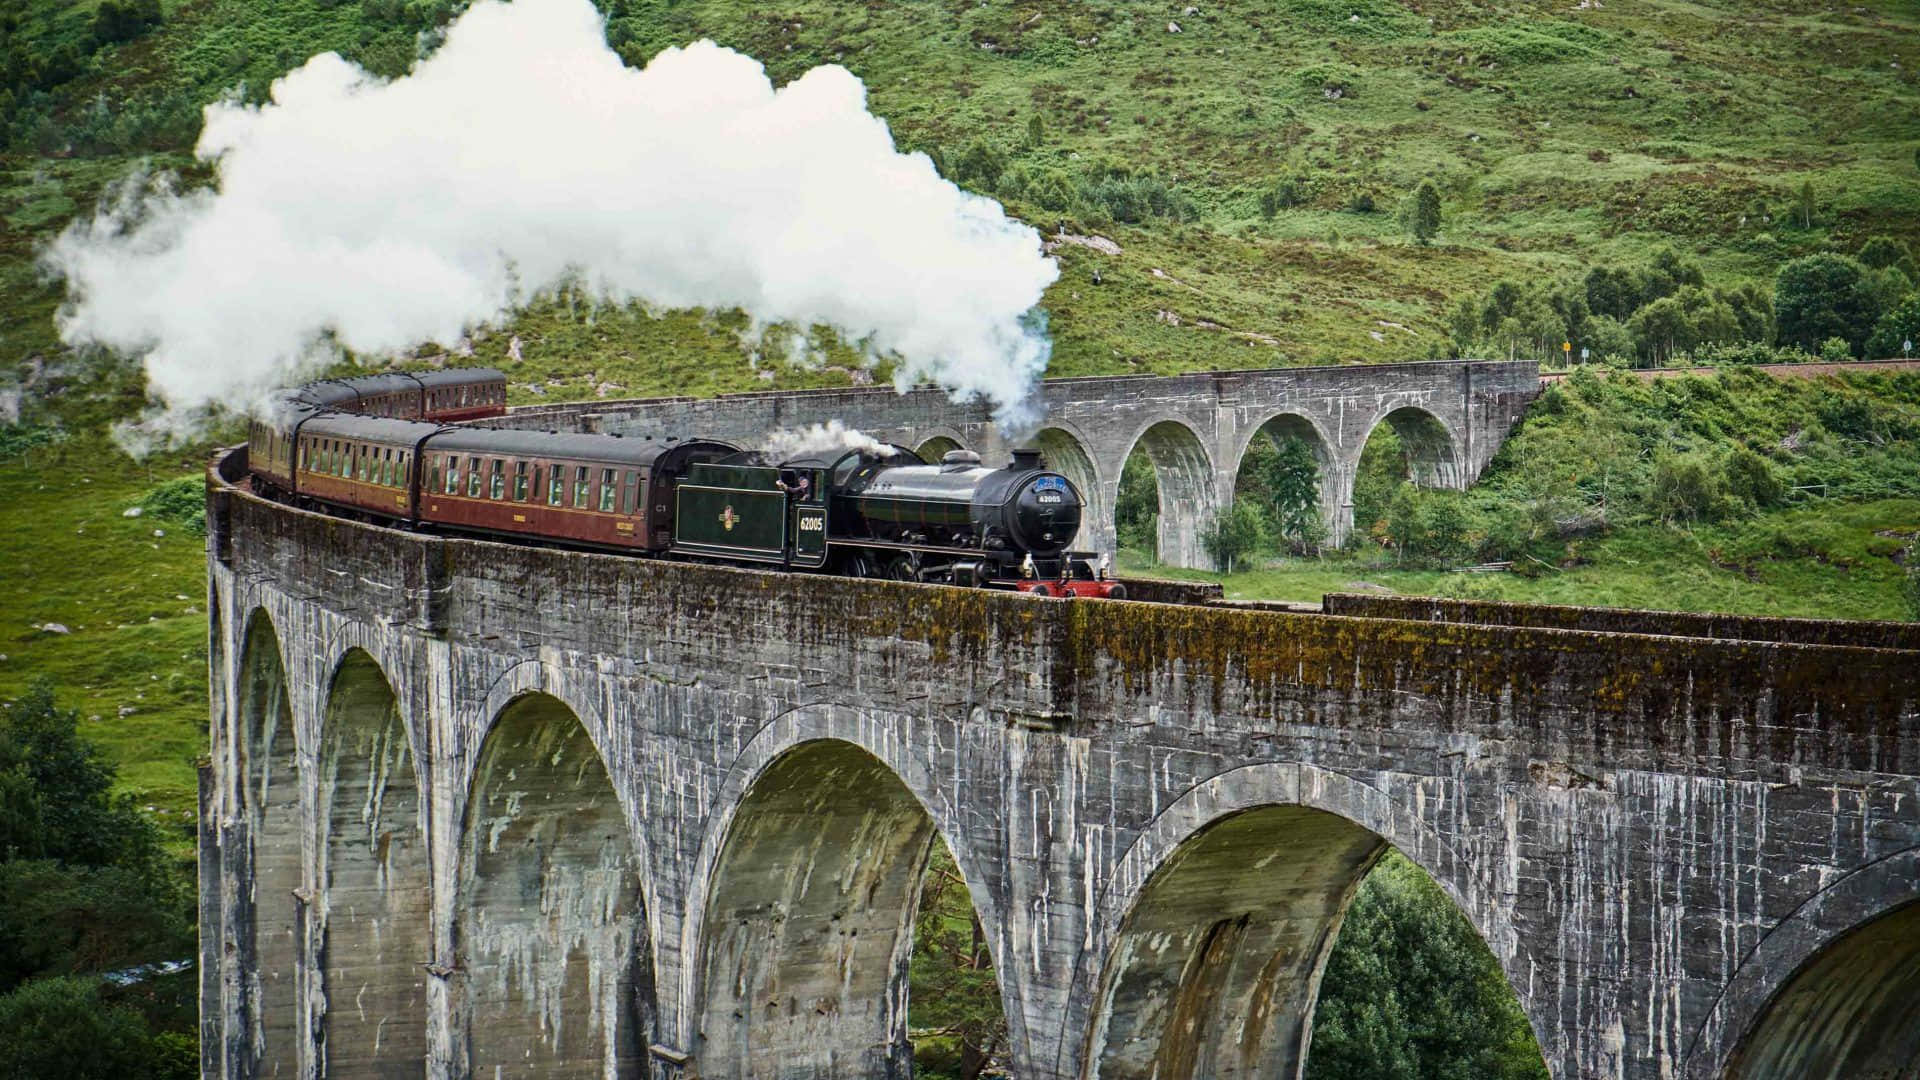 An enchanting journey begins on the Hogwarts Express Wallpaper